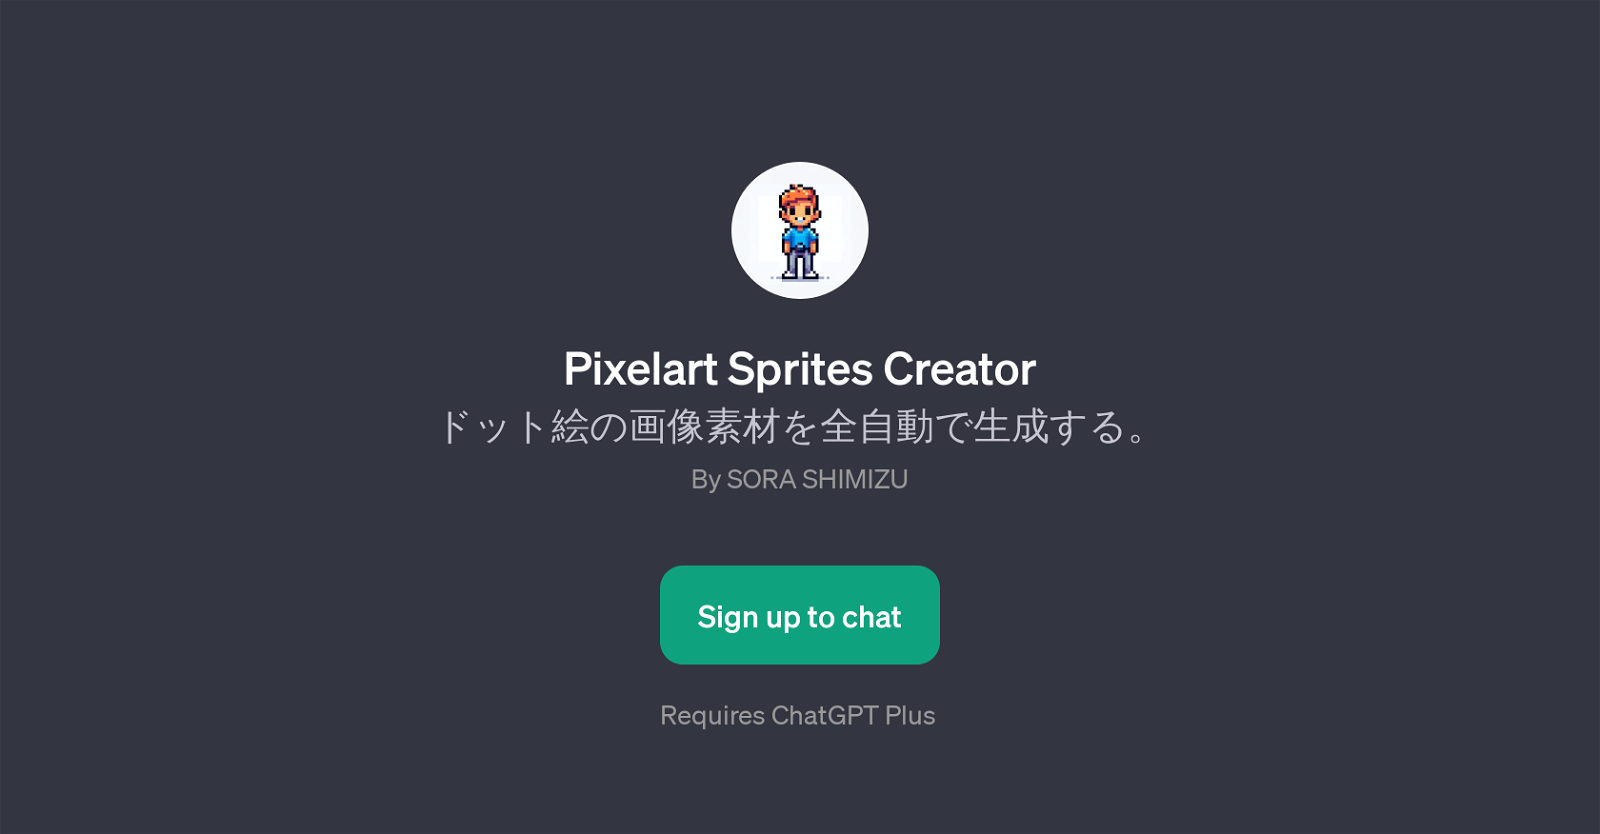 Pixelart Sprites Creator website